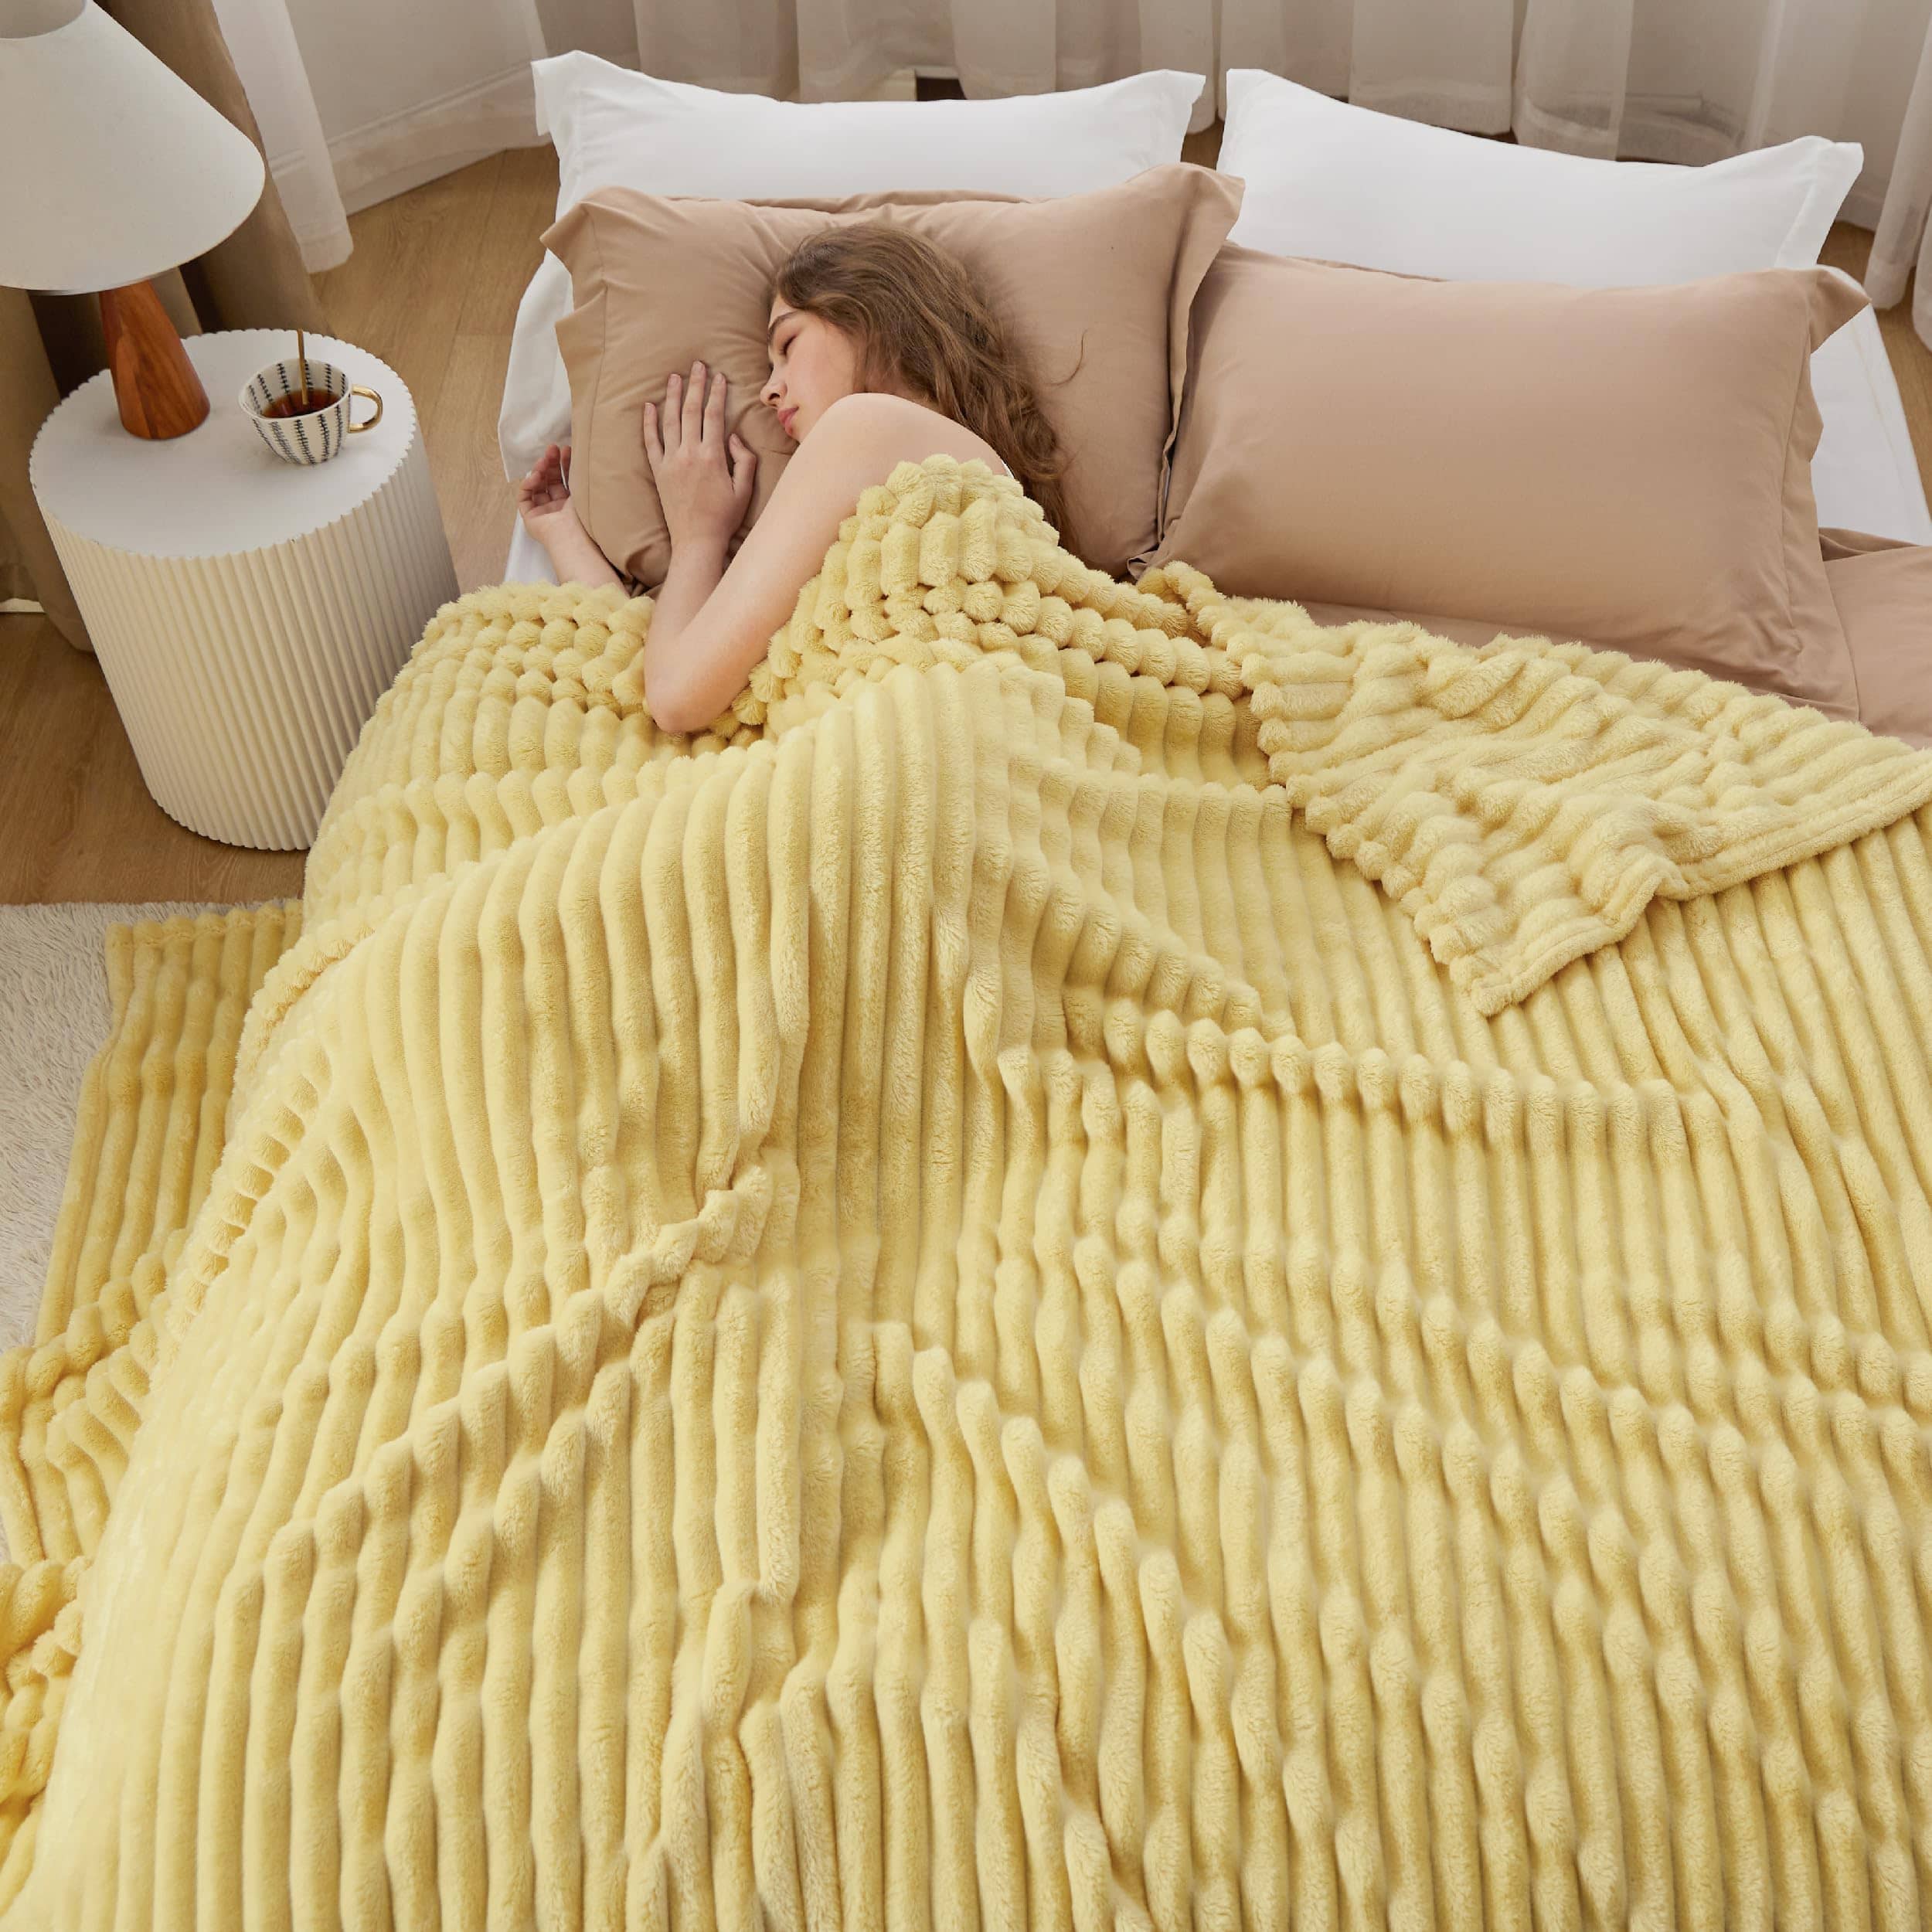 TIKTOK-VIRAL Bedsure Striped Flannel Fleece Blanket